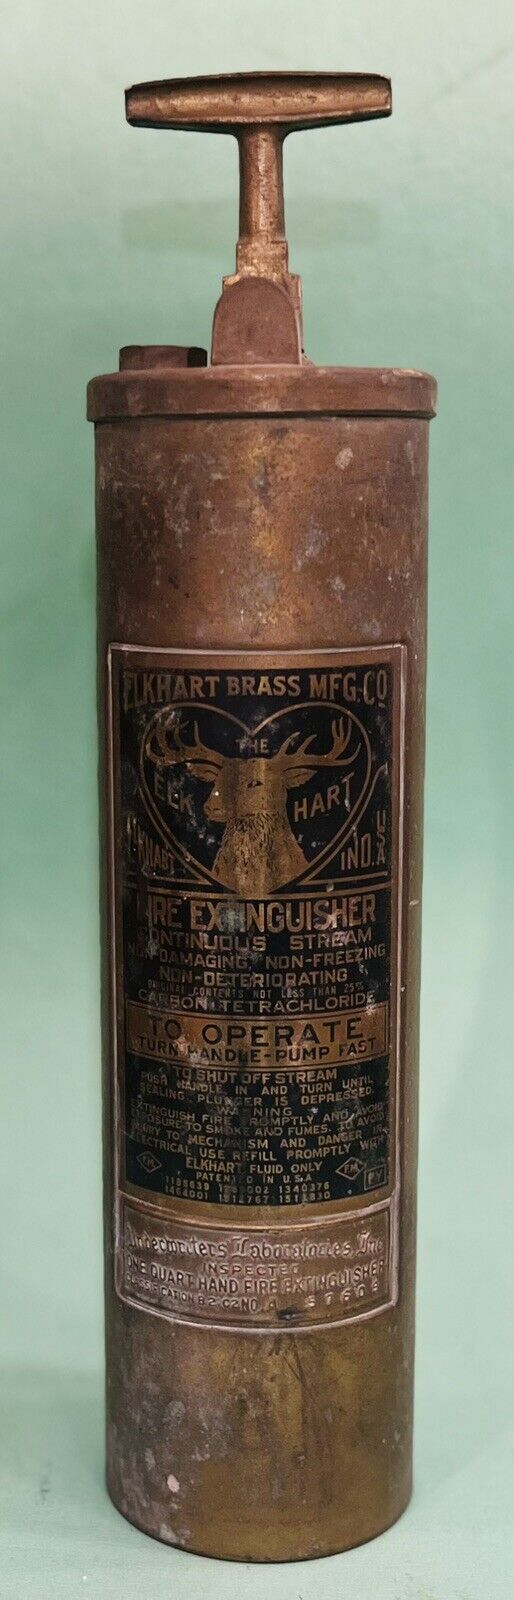 RARE Elkhart Brass 1 Quart Fire Extinguisher w/ Elk Logo, Made in USA - EMPTY